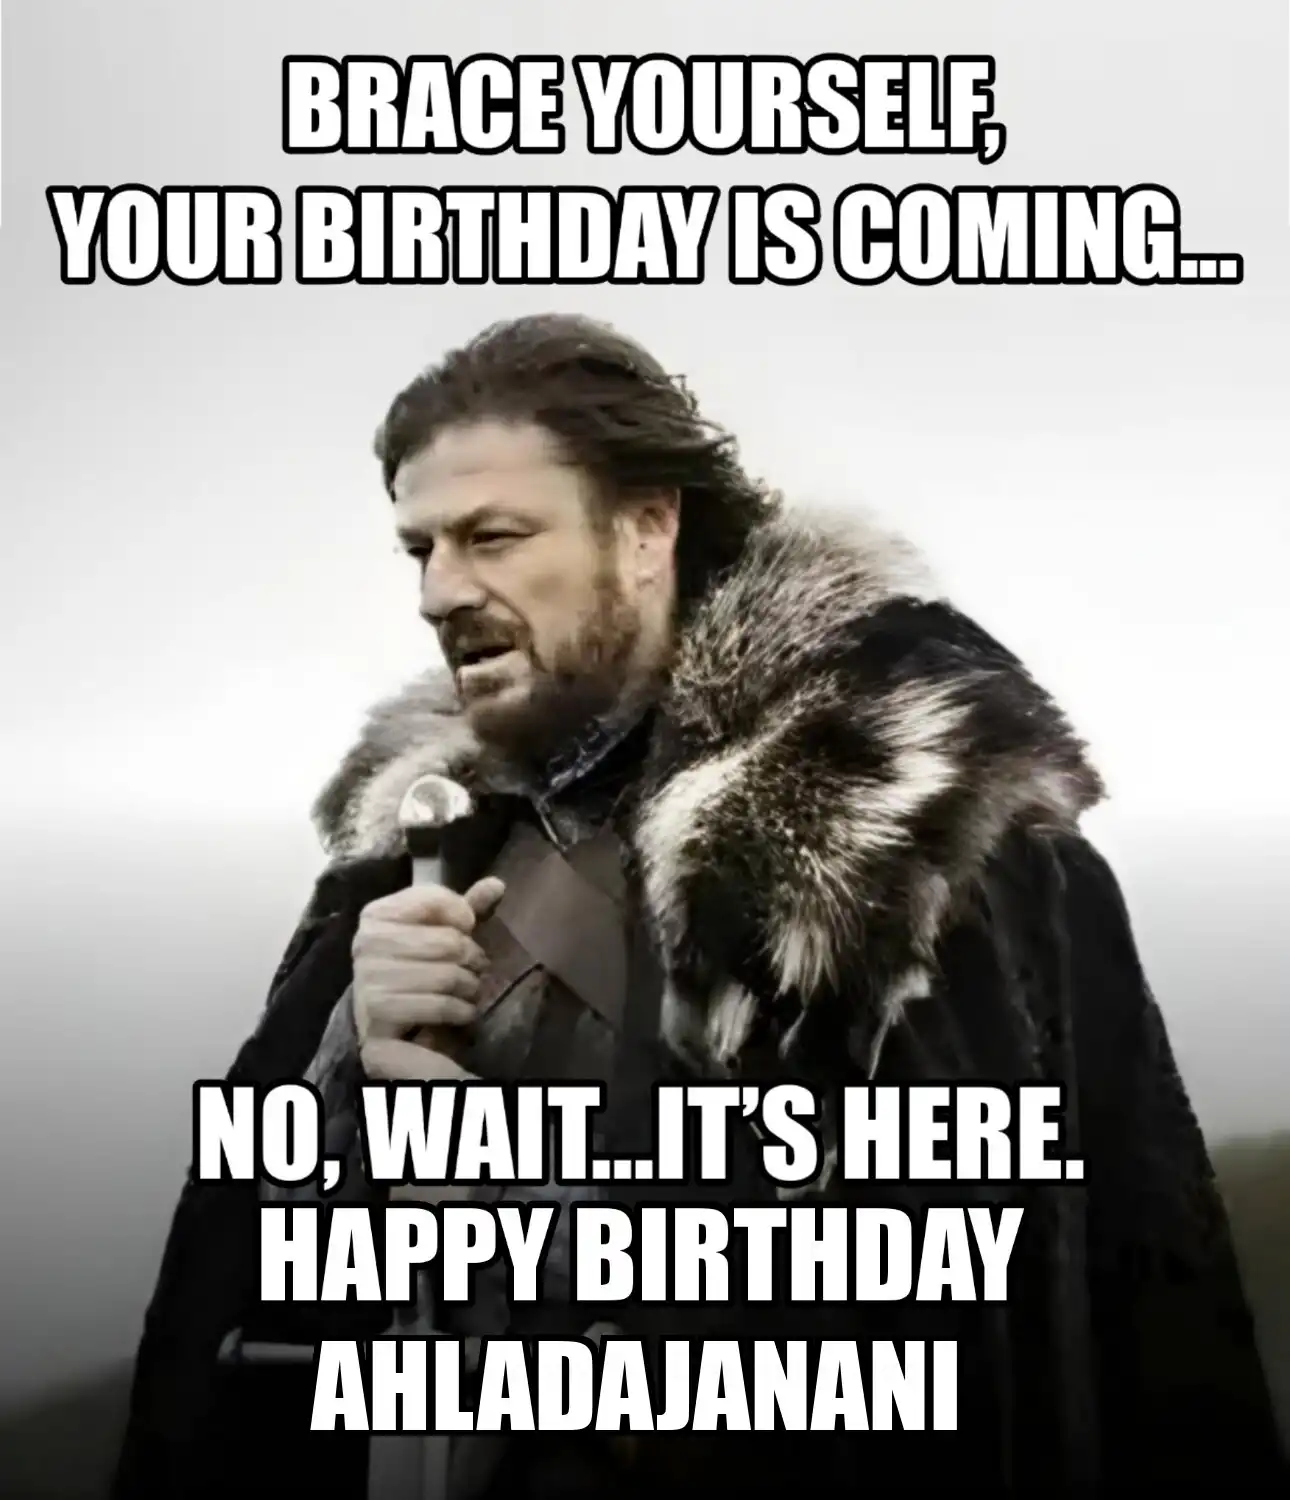 Happy Birthday Ahladajanani Brace Yourself Your Birthday Is Coming Meme